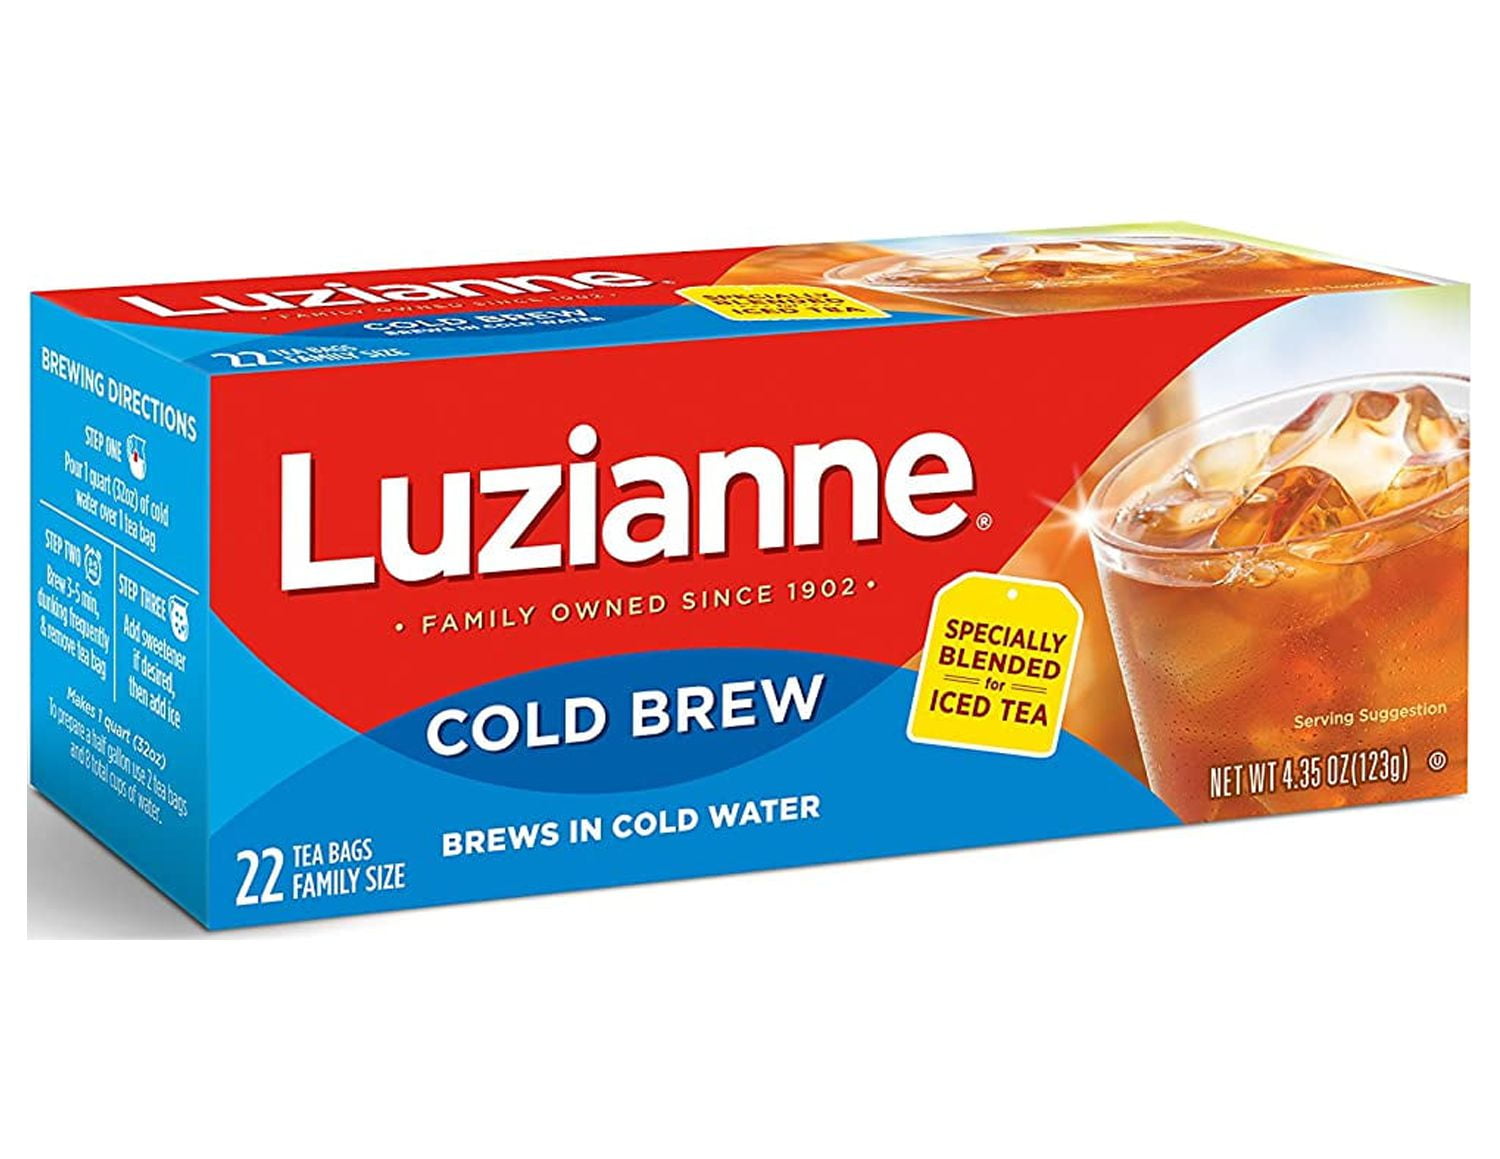 How to Make Sun Tea and Cold Brew Iced Tea - Luzianne Tea